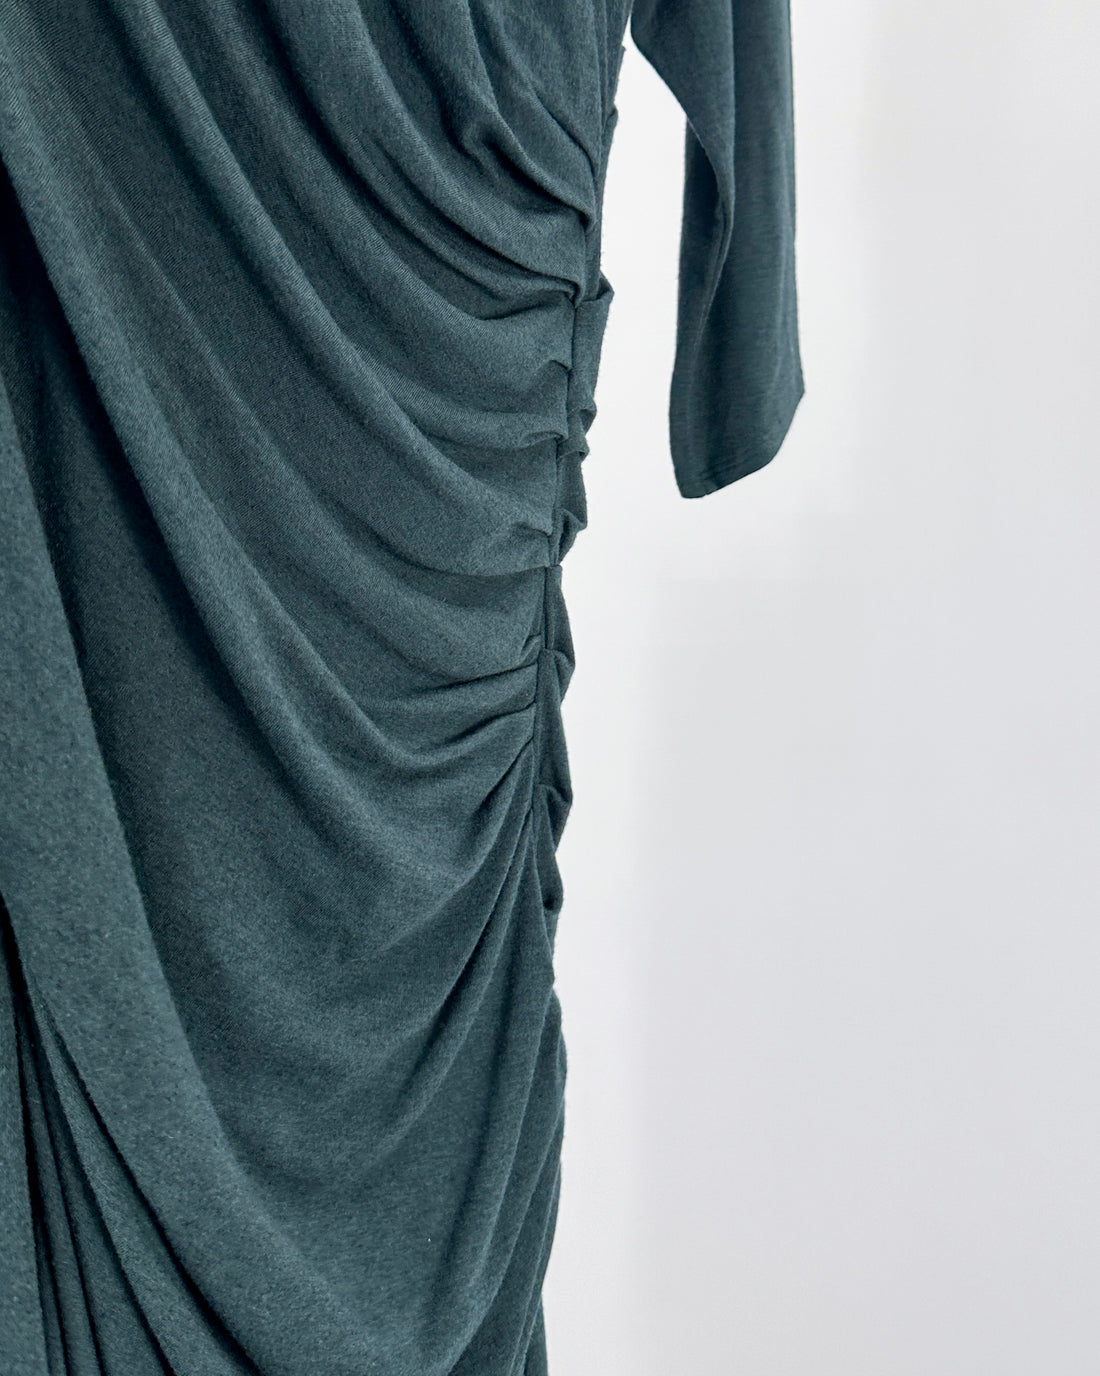 Helmut Lang Green Pleated Dress 2000's